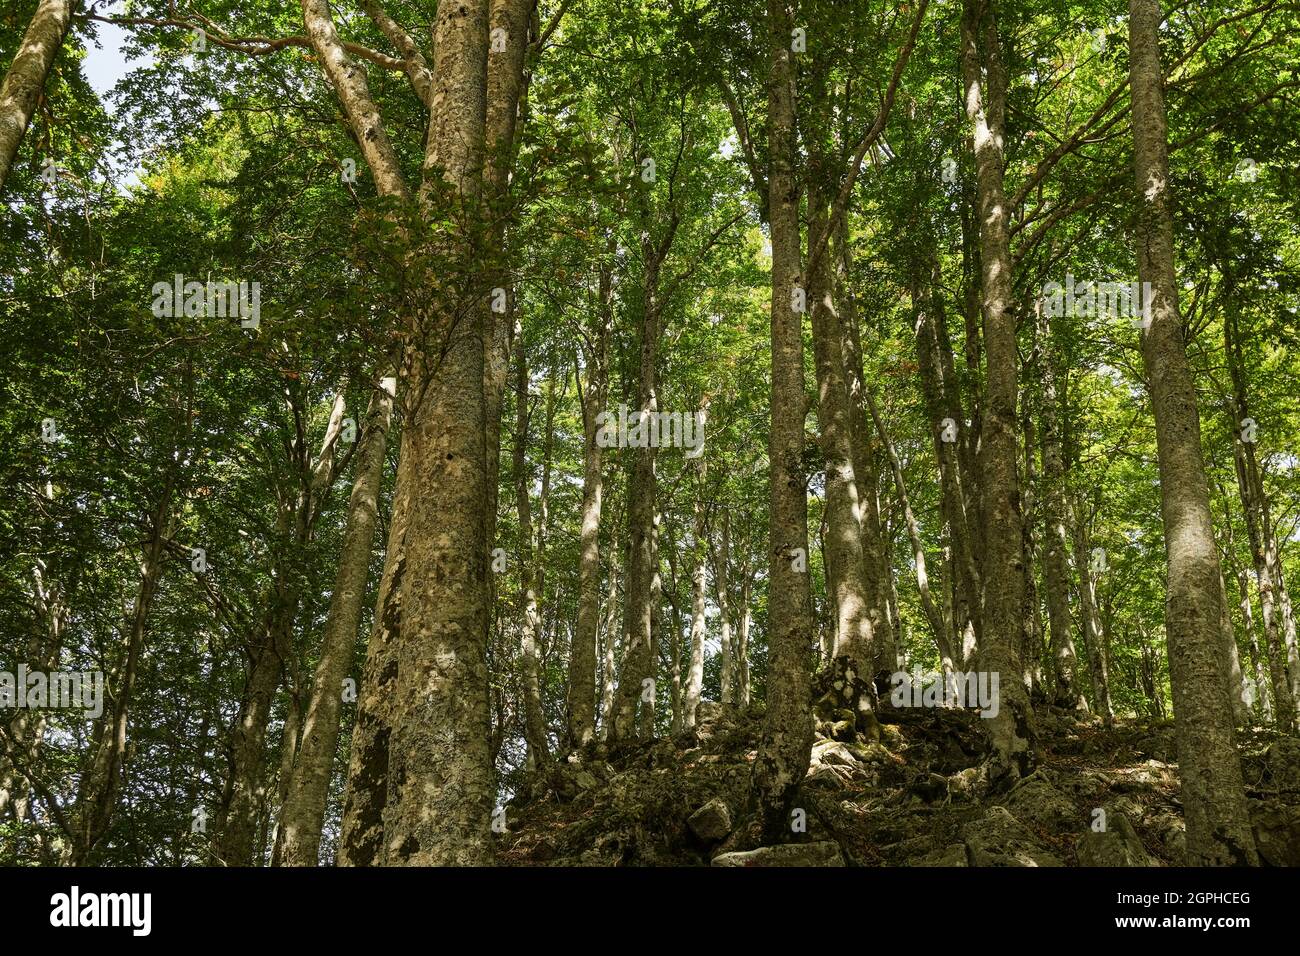 Ecosistema de bosques silvestres de haya en un paisaje natural sin procesar, fondo natural Foto de stock